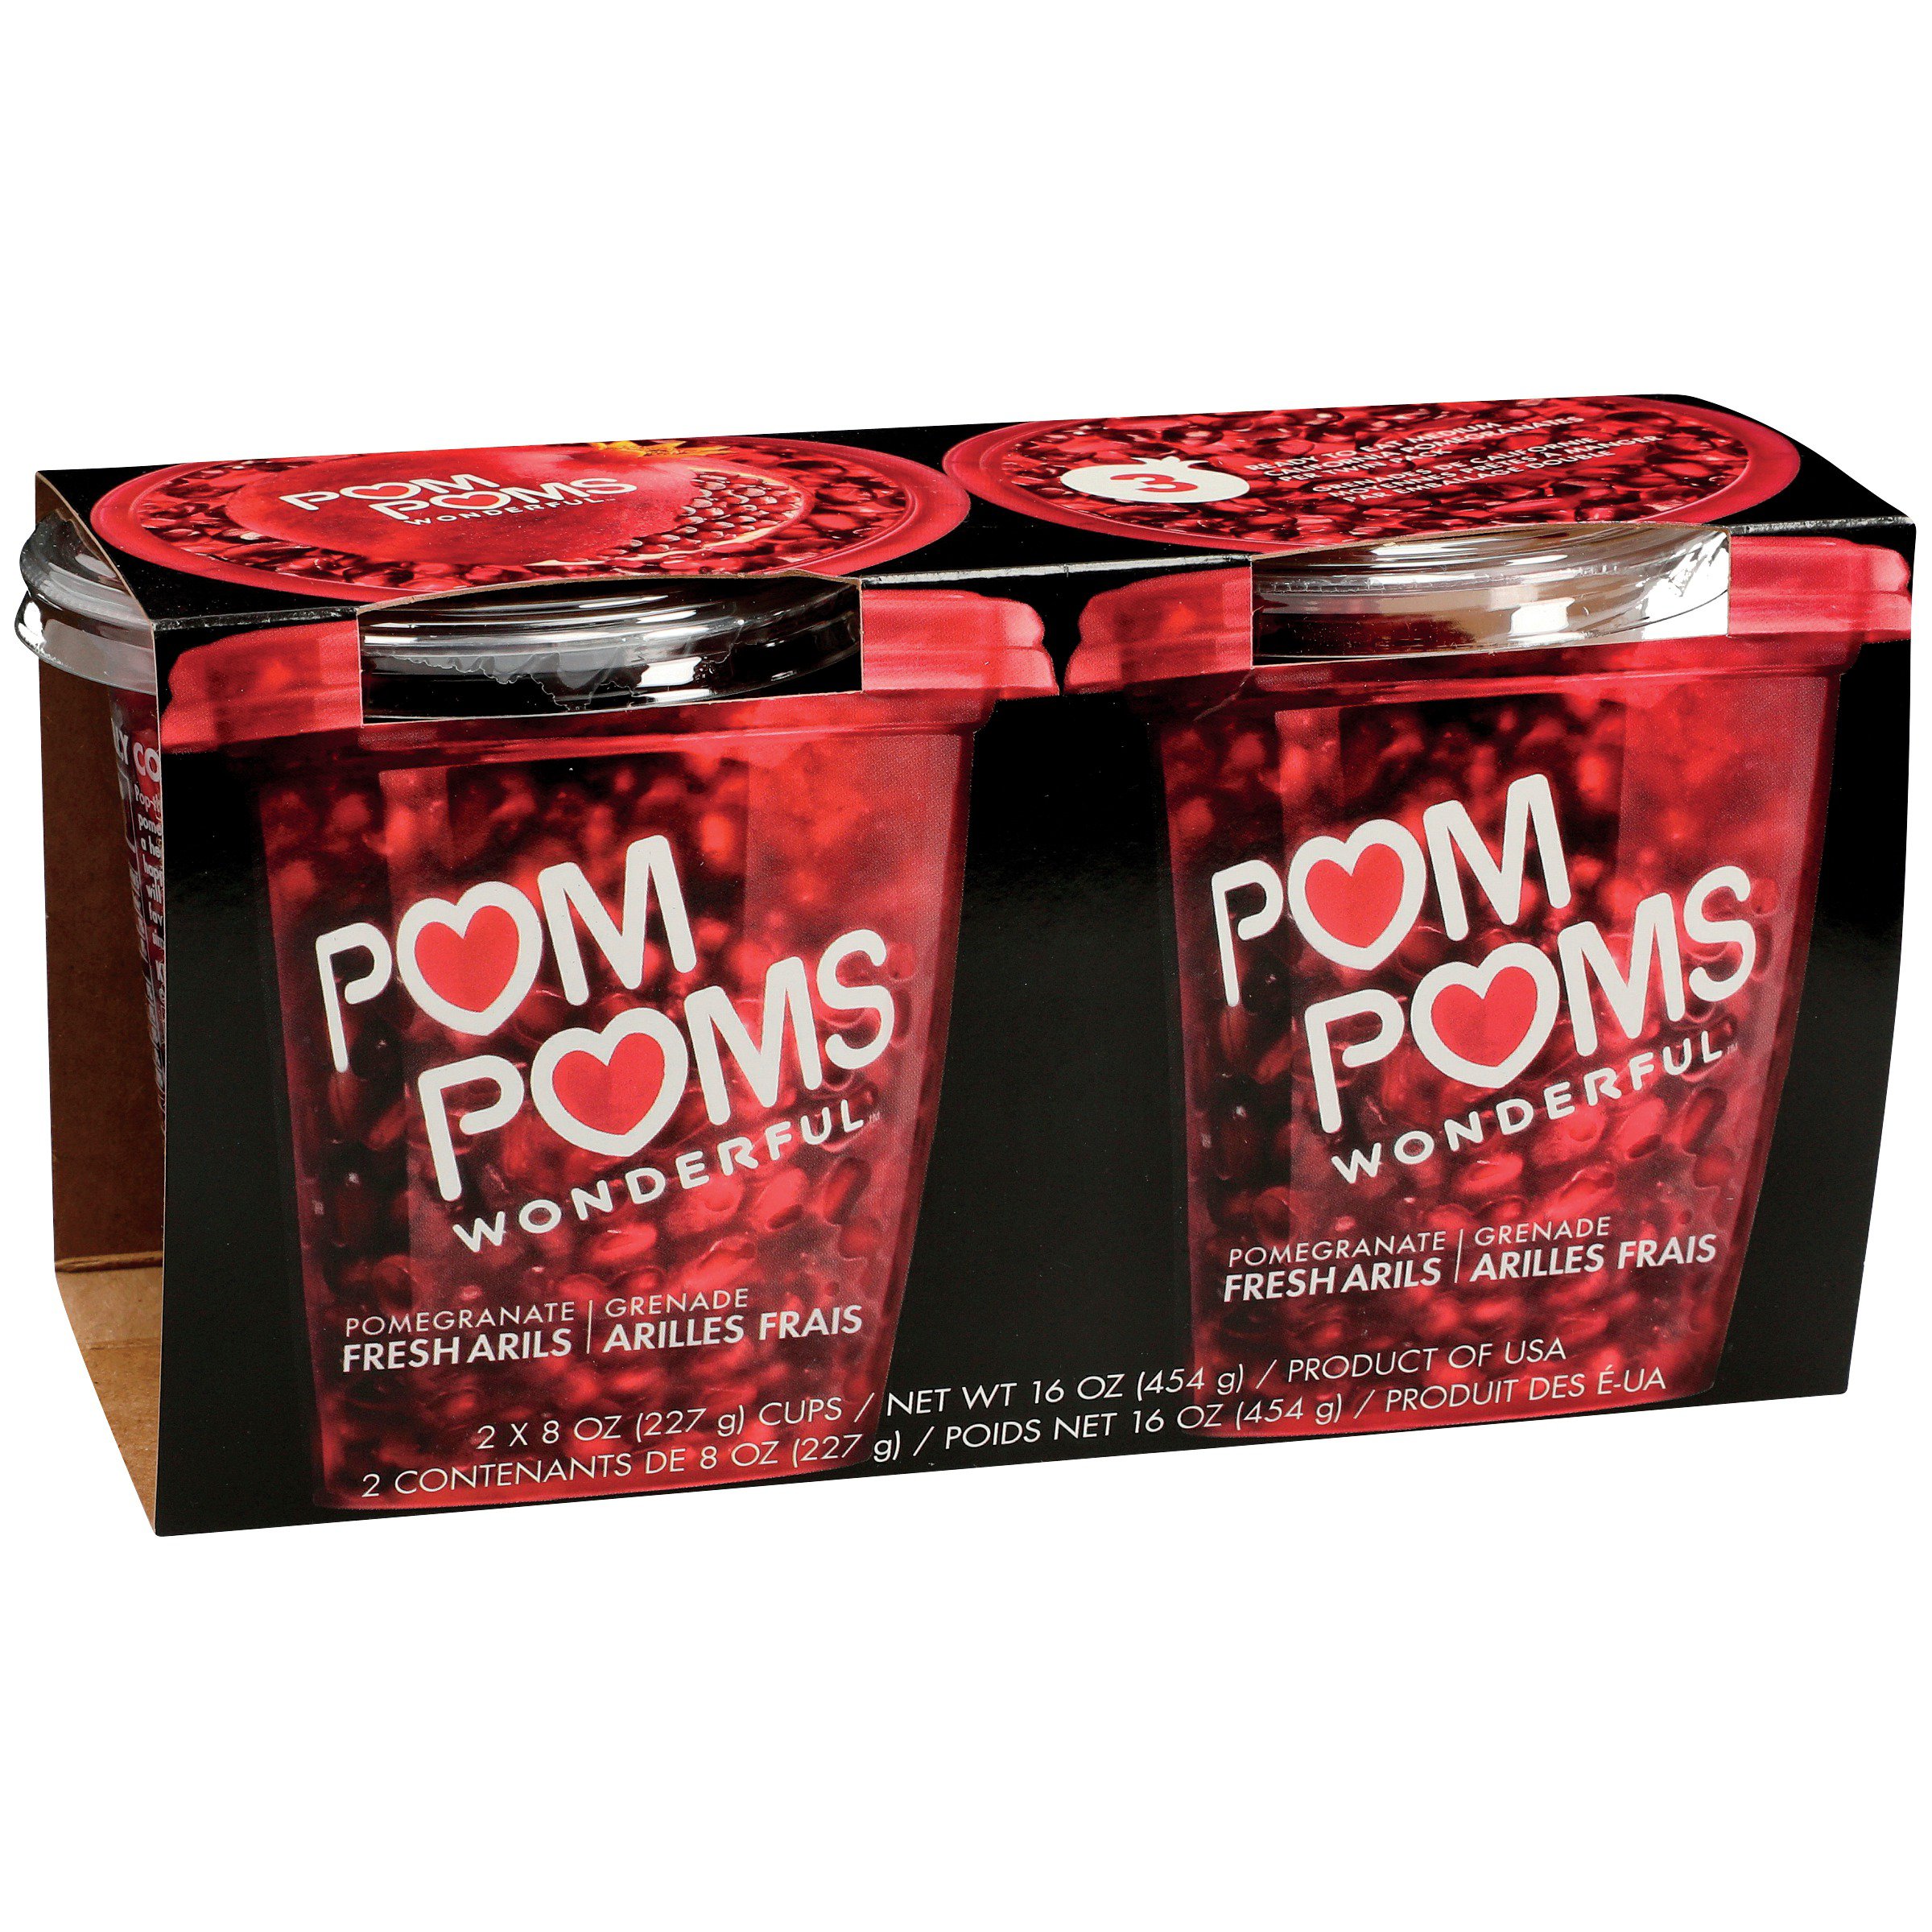 Pom Wonderful Pomgranate Arils Twin Pack, 8 oz cups Shop